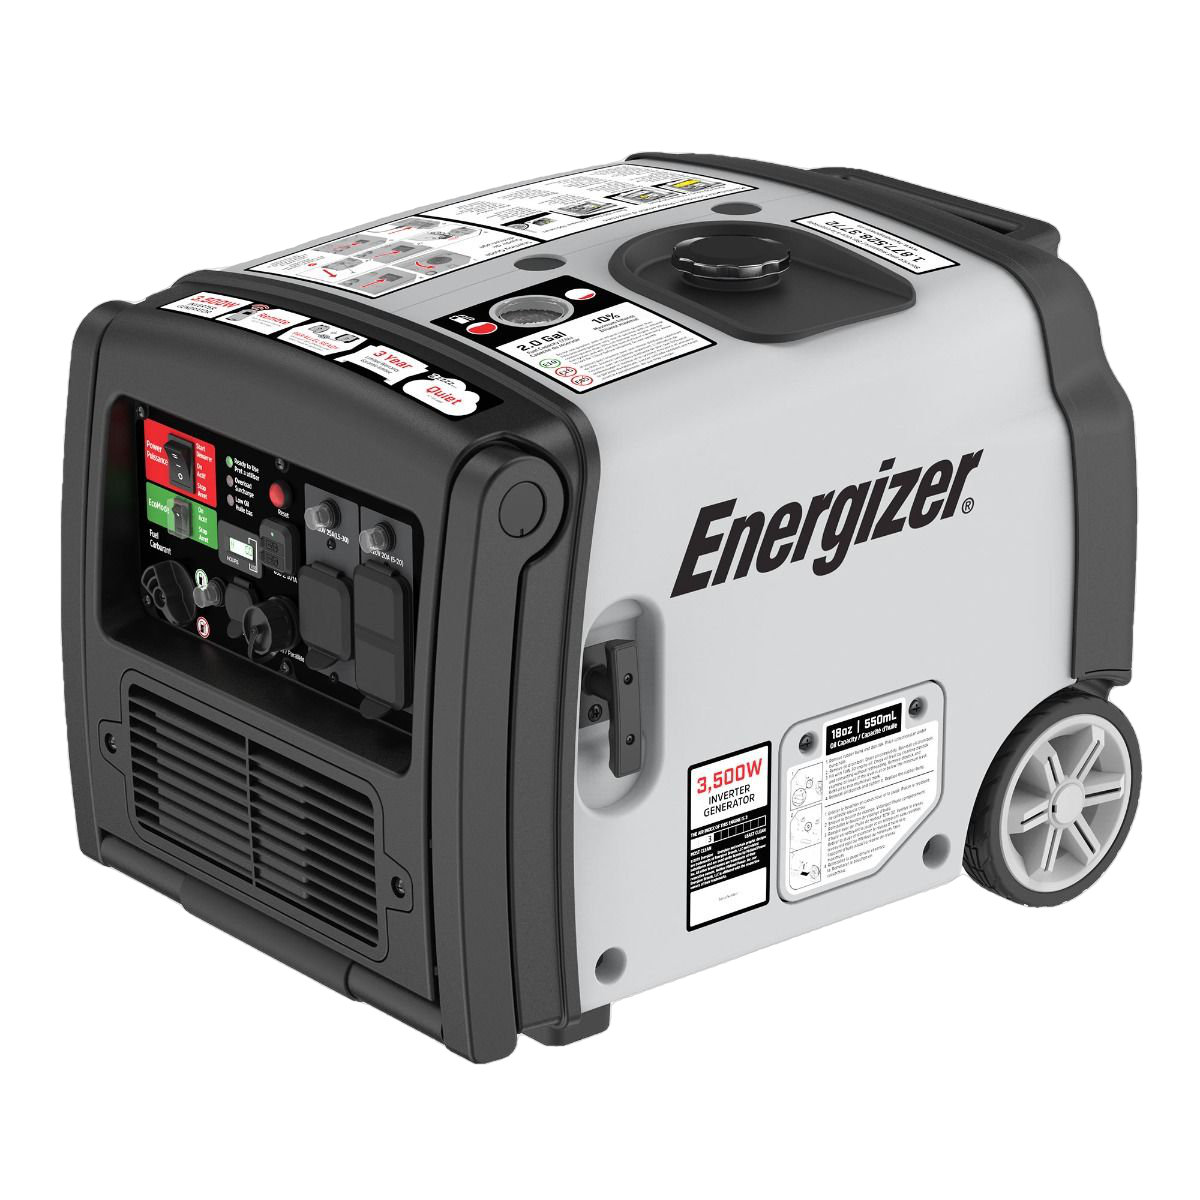 Energizer, Energizer eZV3500P 3000W/3500W Gas Powered Inverter Generator with Remote Start New